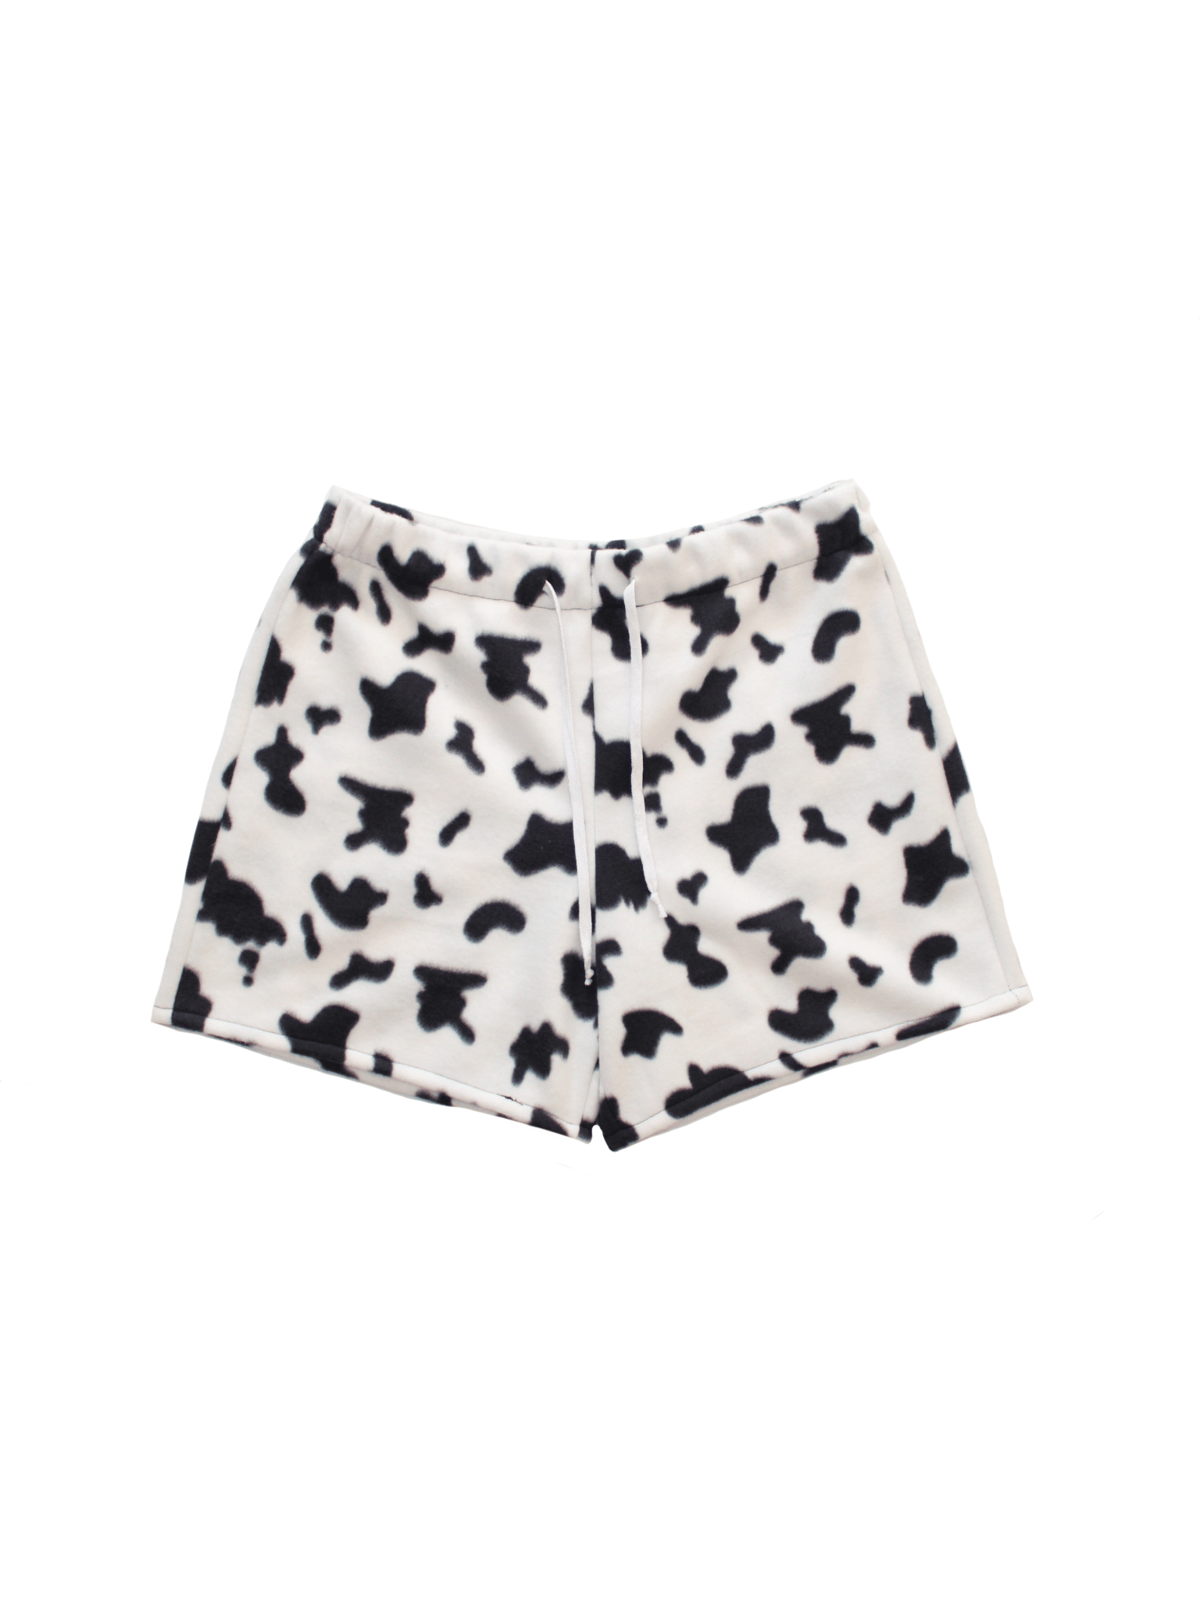 Image of Cow print shorts 